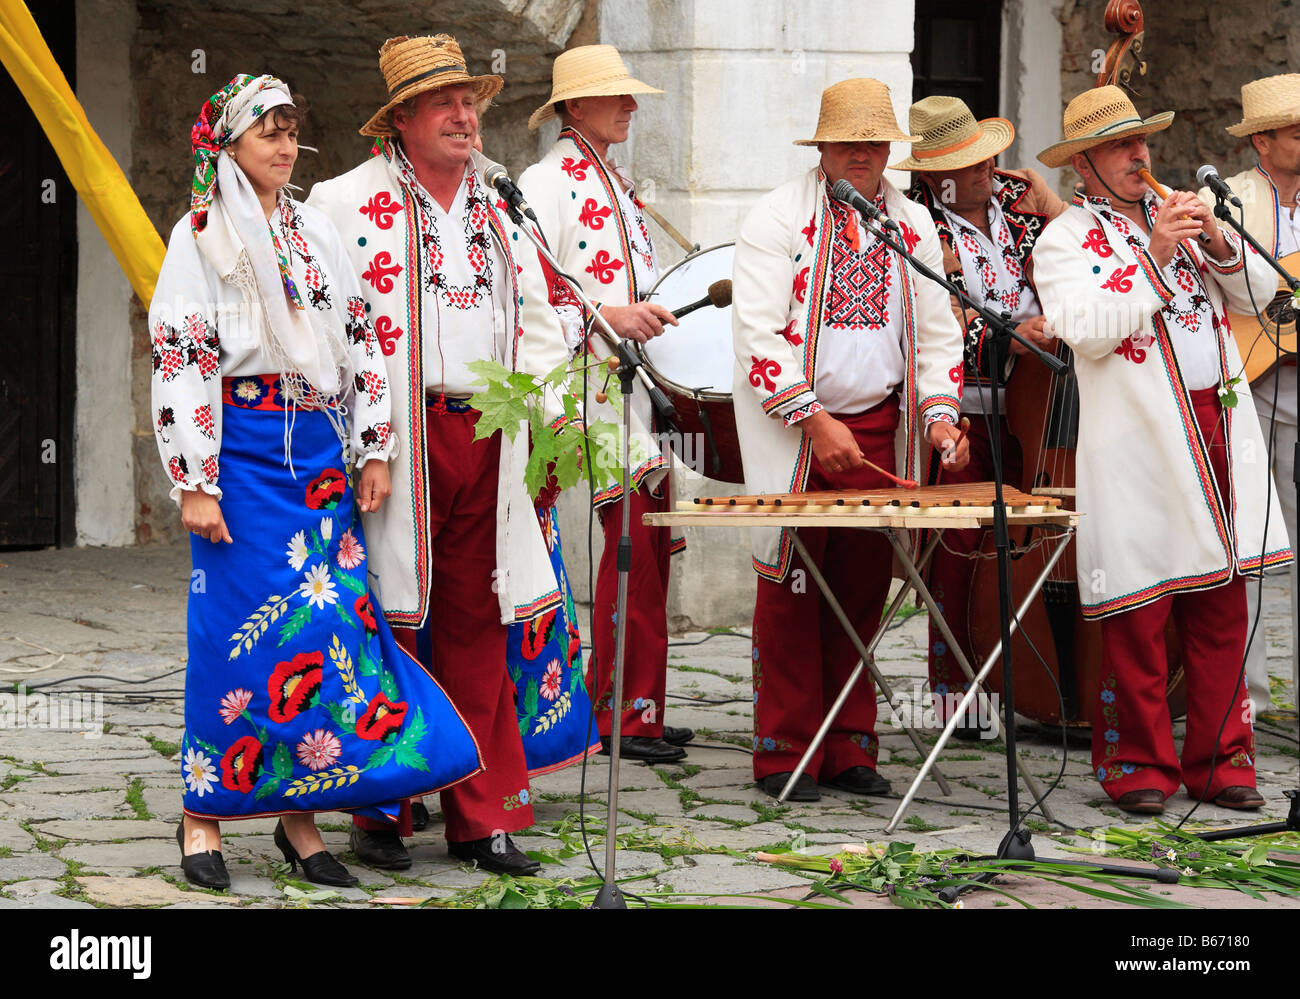 Ukrainian folk festival, Kamianets Podilskyi, Podolia, Khmelnytskyi oblast (province), Ukraine Stock Photo